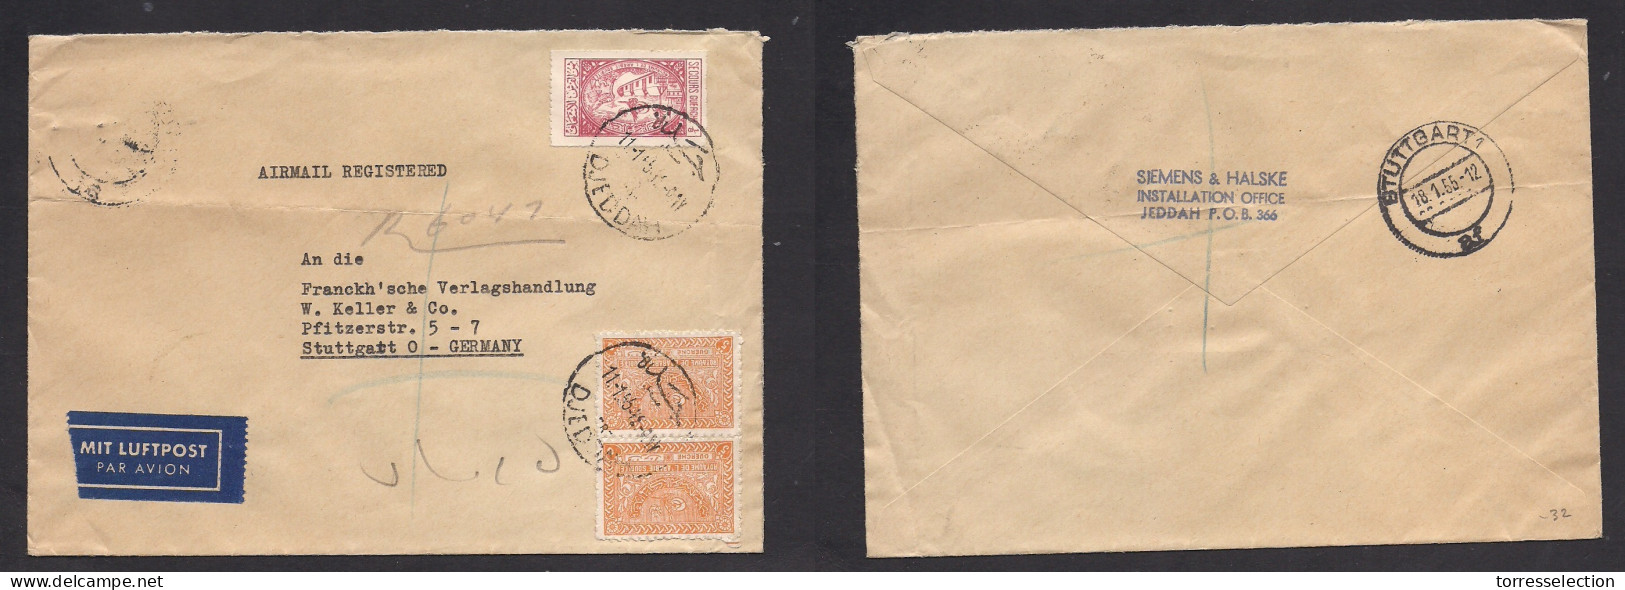 SAUDI ARABIA. 1955 (11 Jan) Djeddah - Stuttgart, Germany (18 Jan) Airmail Registered Multifkd Env. Fine. XSALE. - Arabie Saoudite